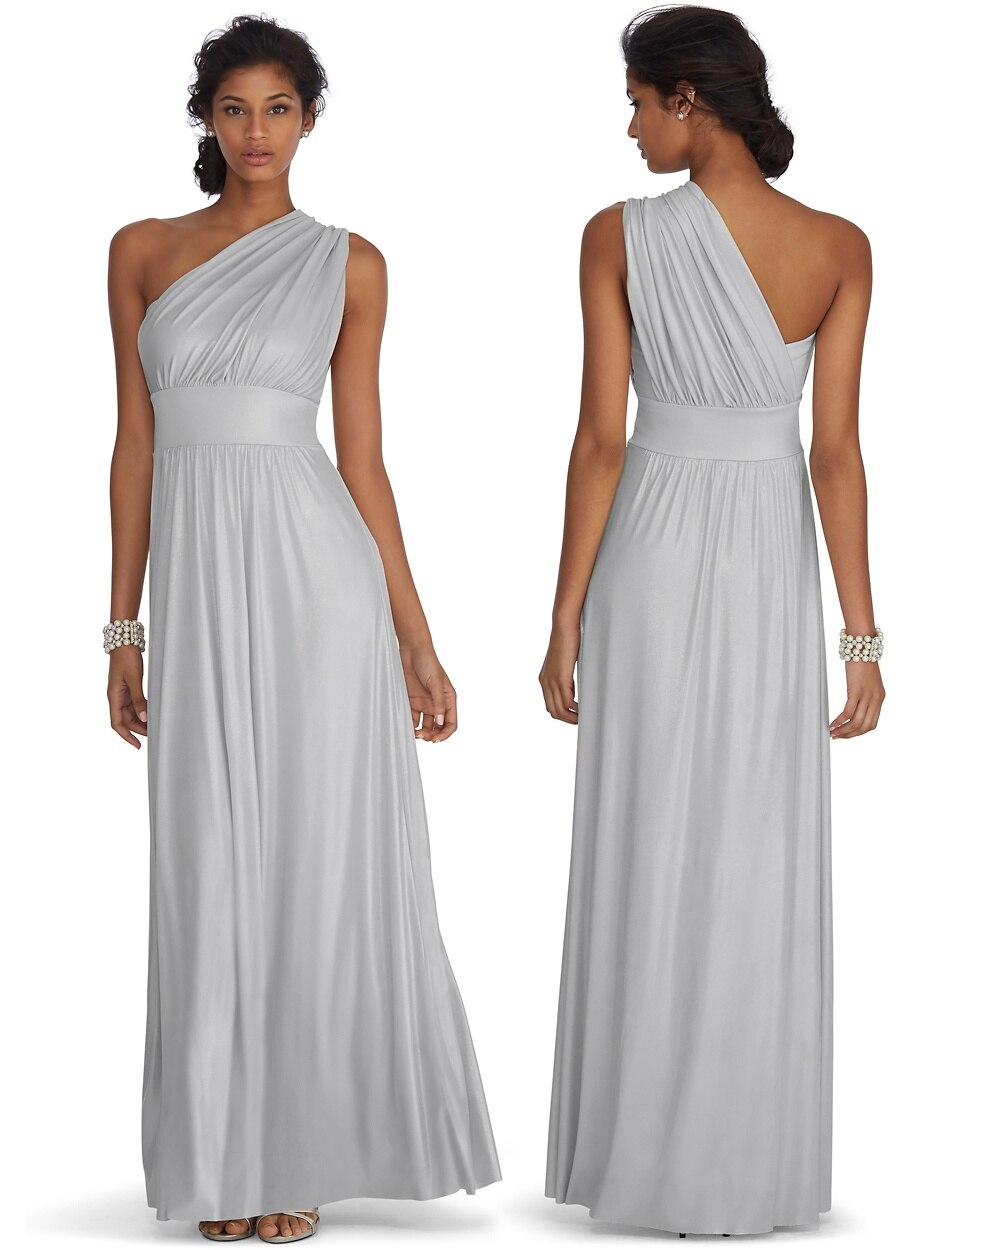 Genius Metallic Convertible Silver Gown - Shop Dresses for Women ...